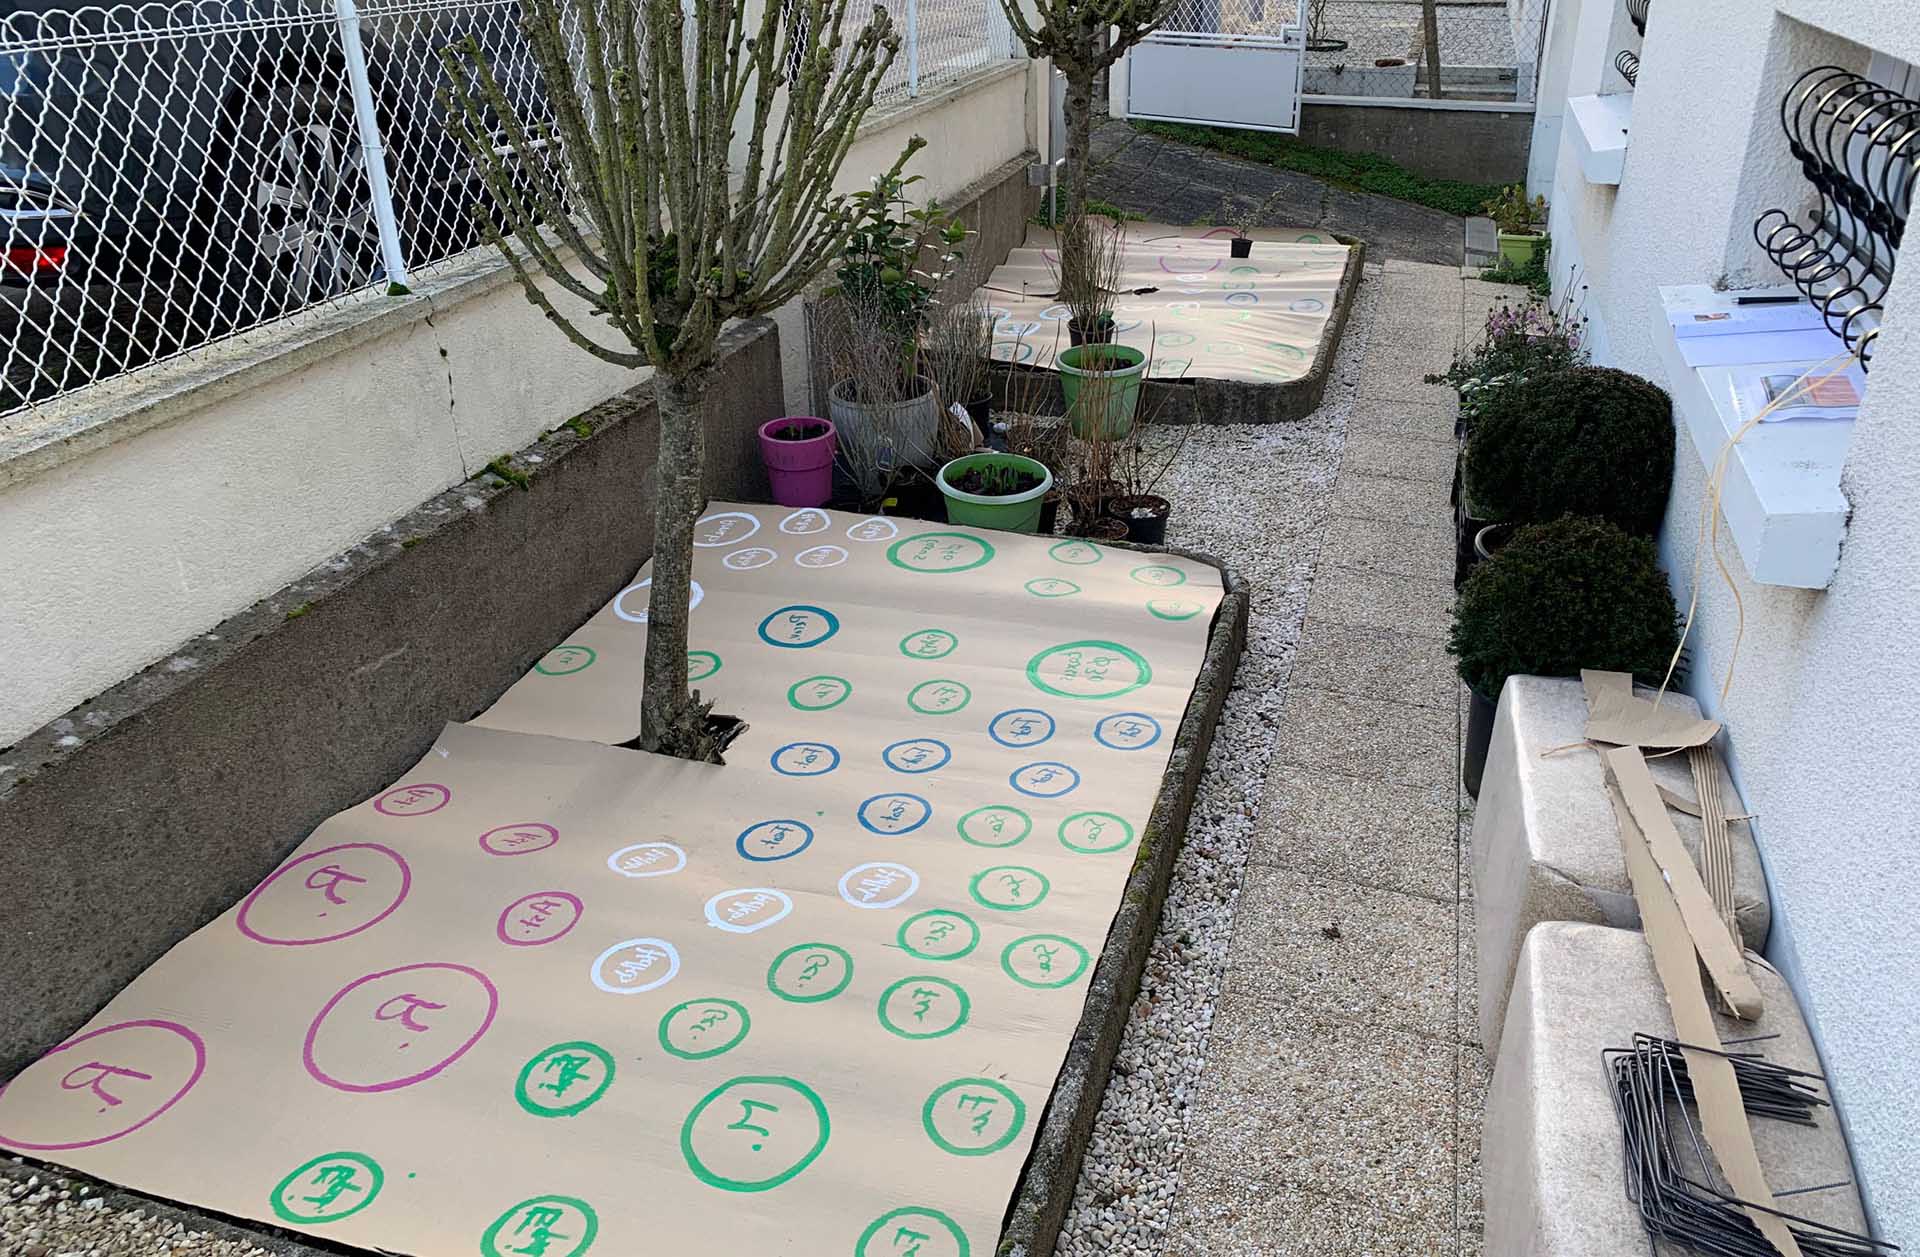 Planting plan installed in a garden